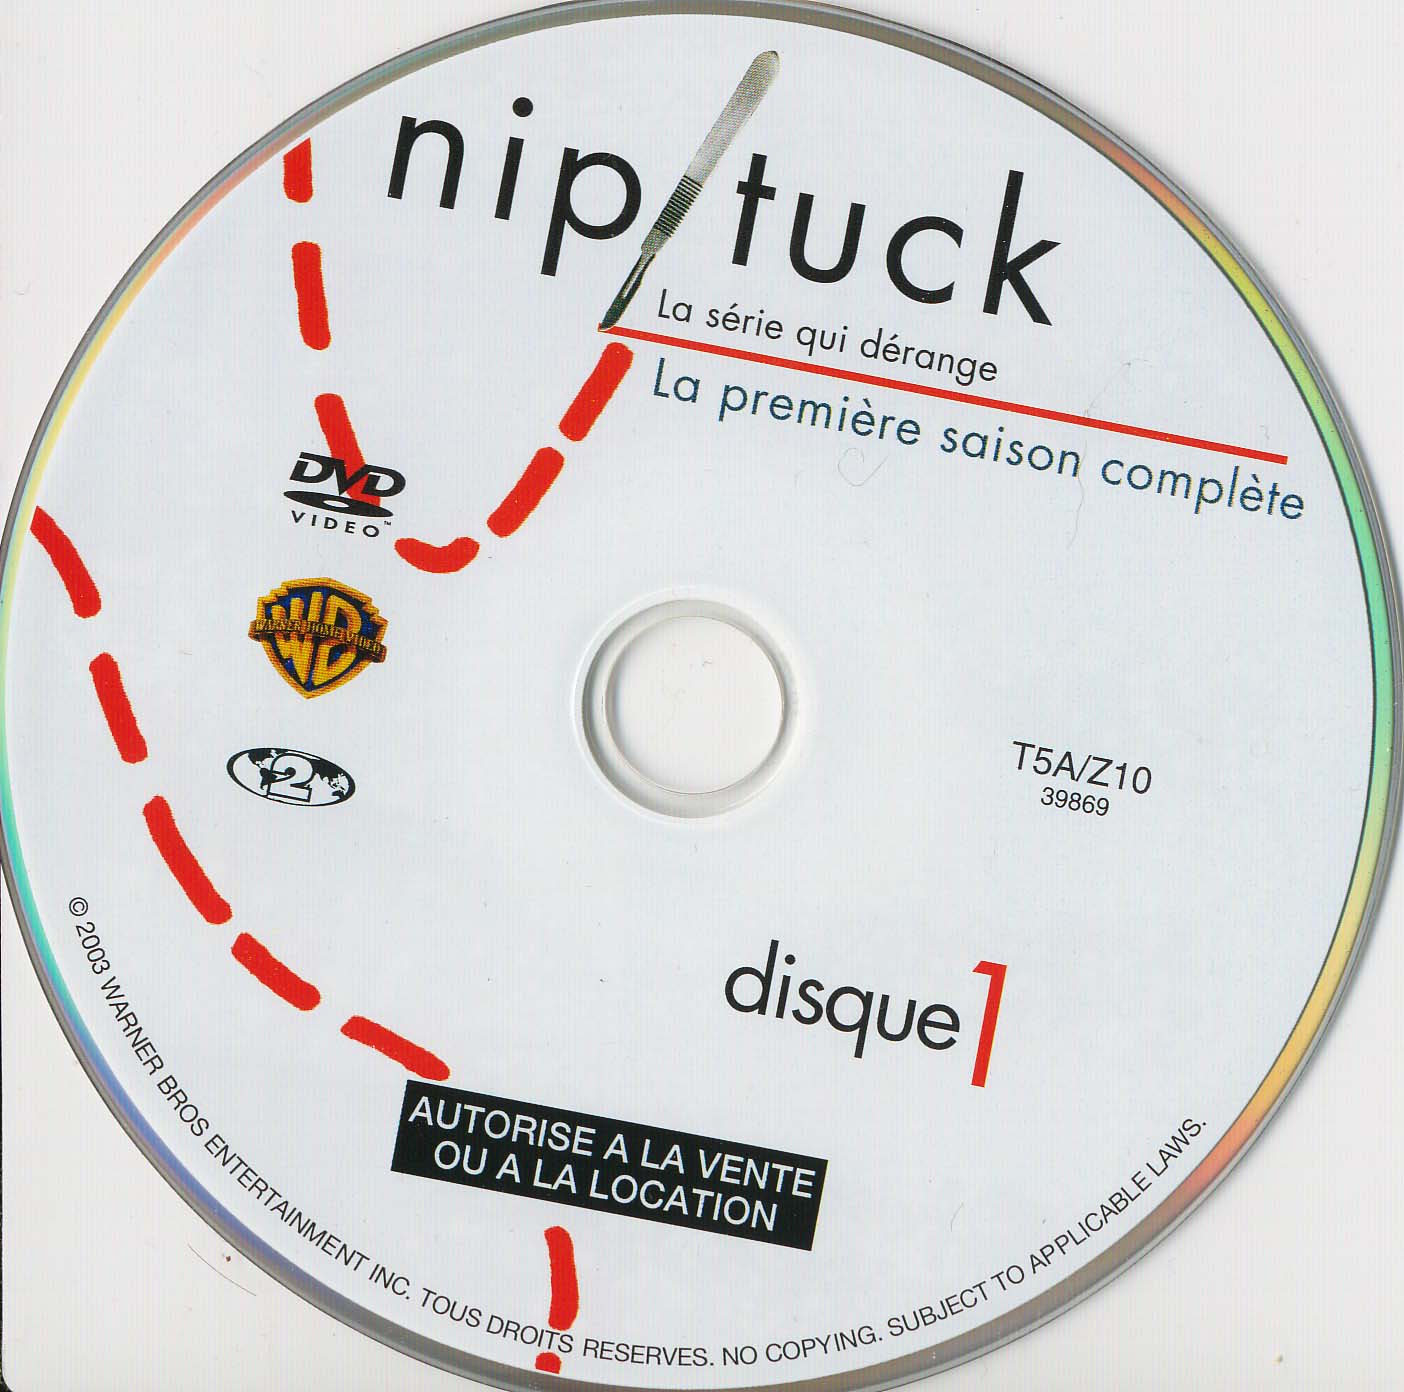 Nip-Tuck saison 1 dvd 1